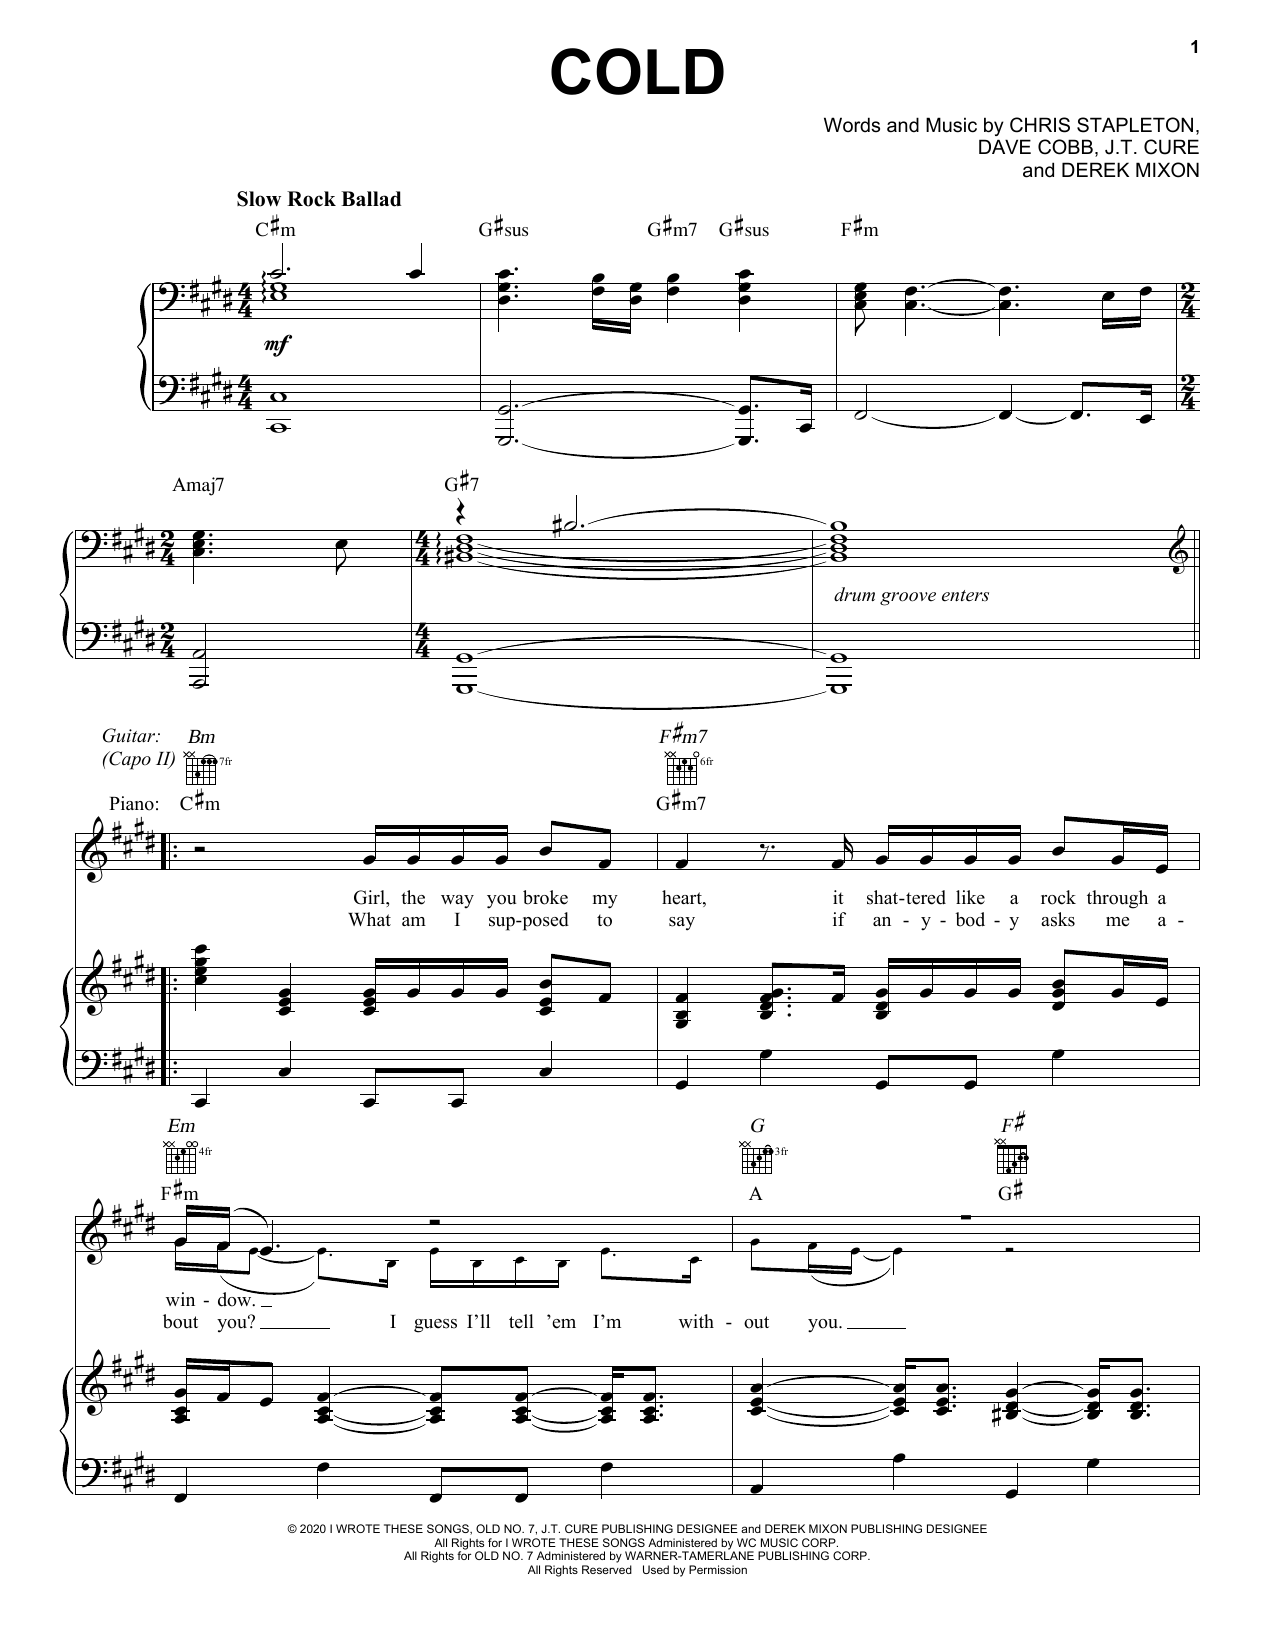 Chris Stapleton "Cold" Sheet Music Notes Download Printable PDF Score